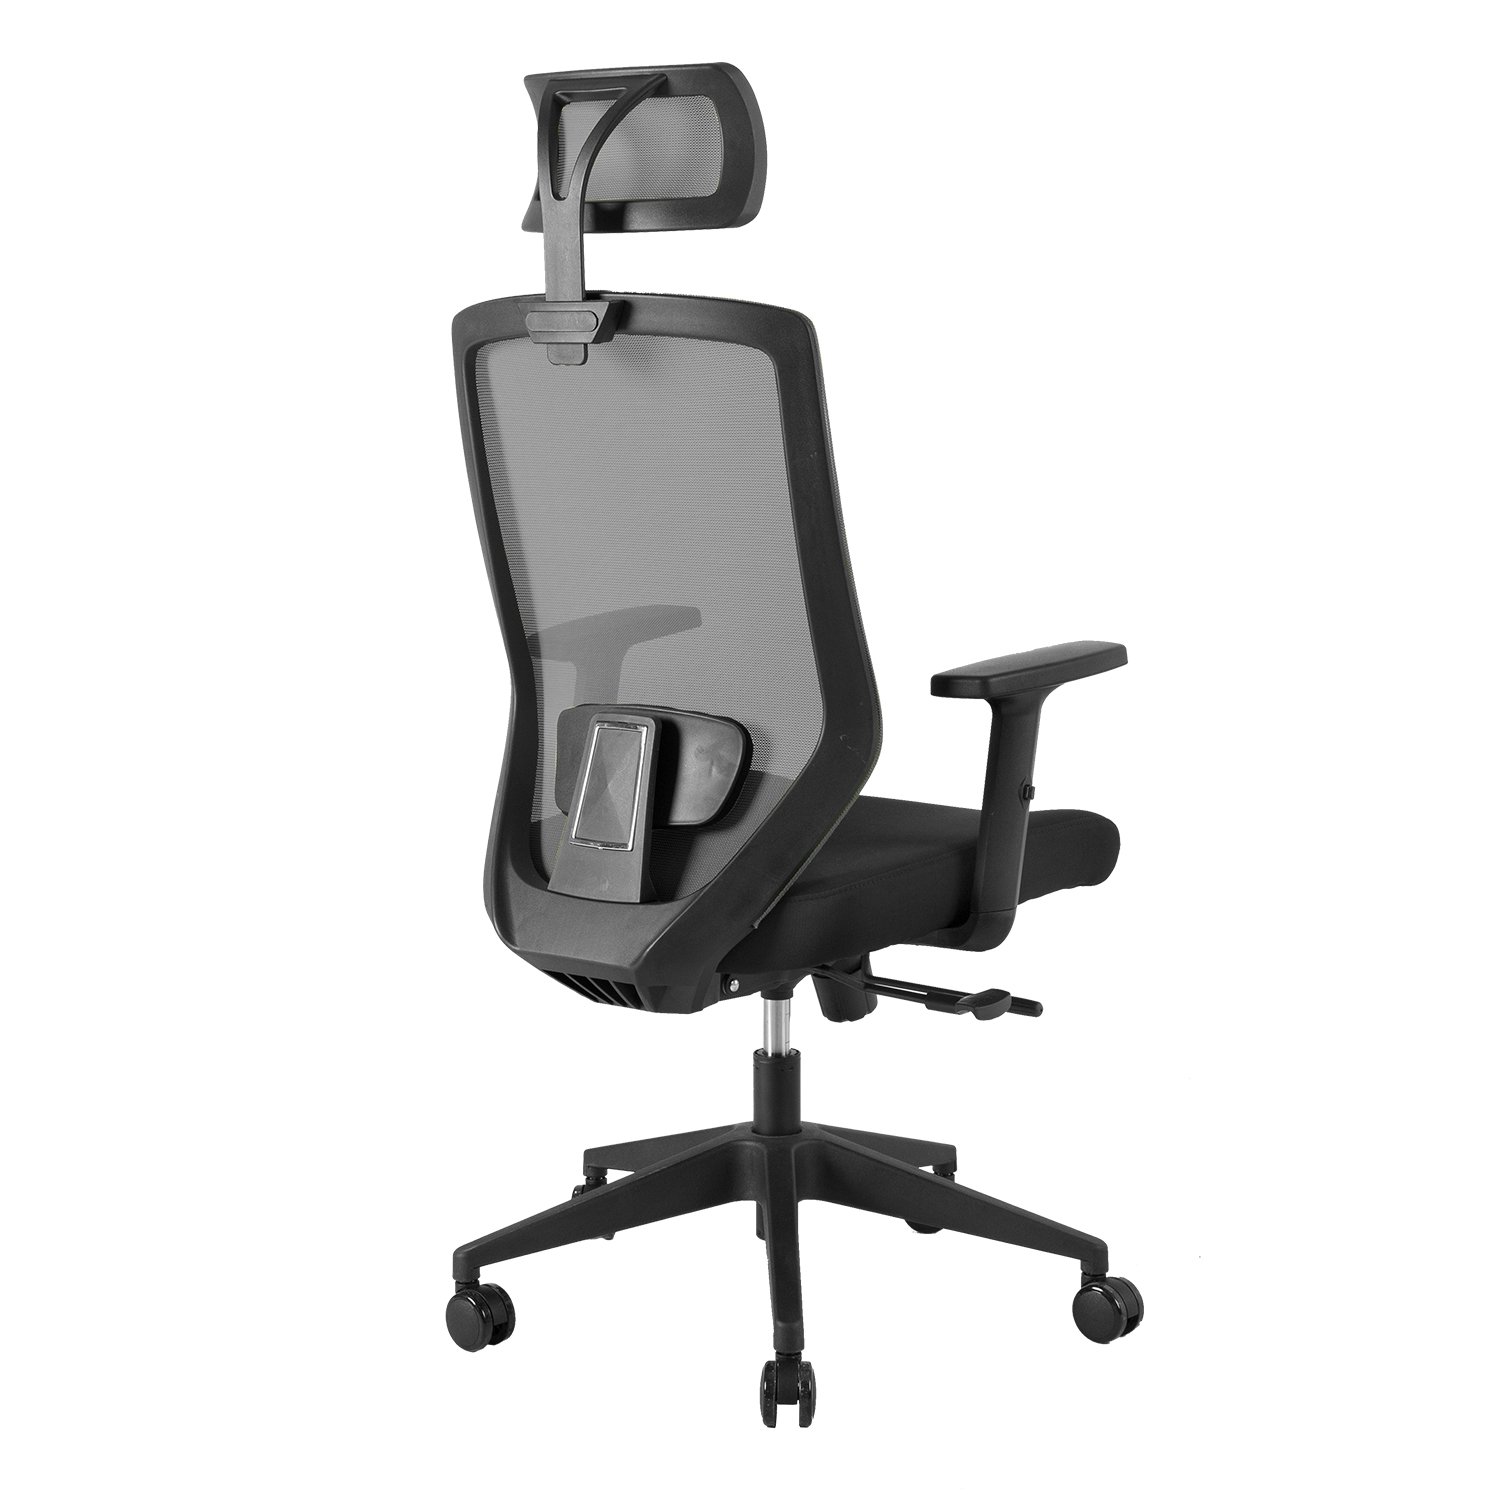 Biuro kėdė JOY, 64x64x115-125cm, juoda - 2